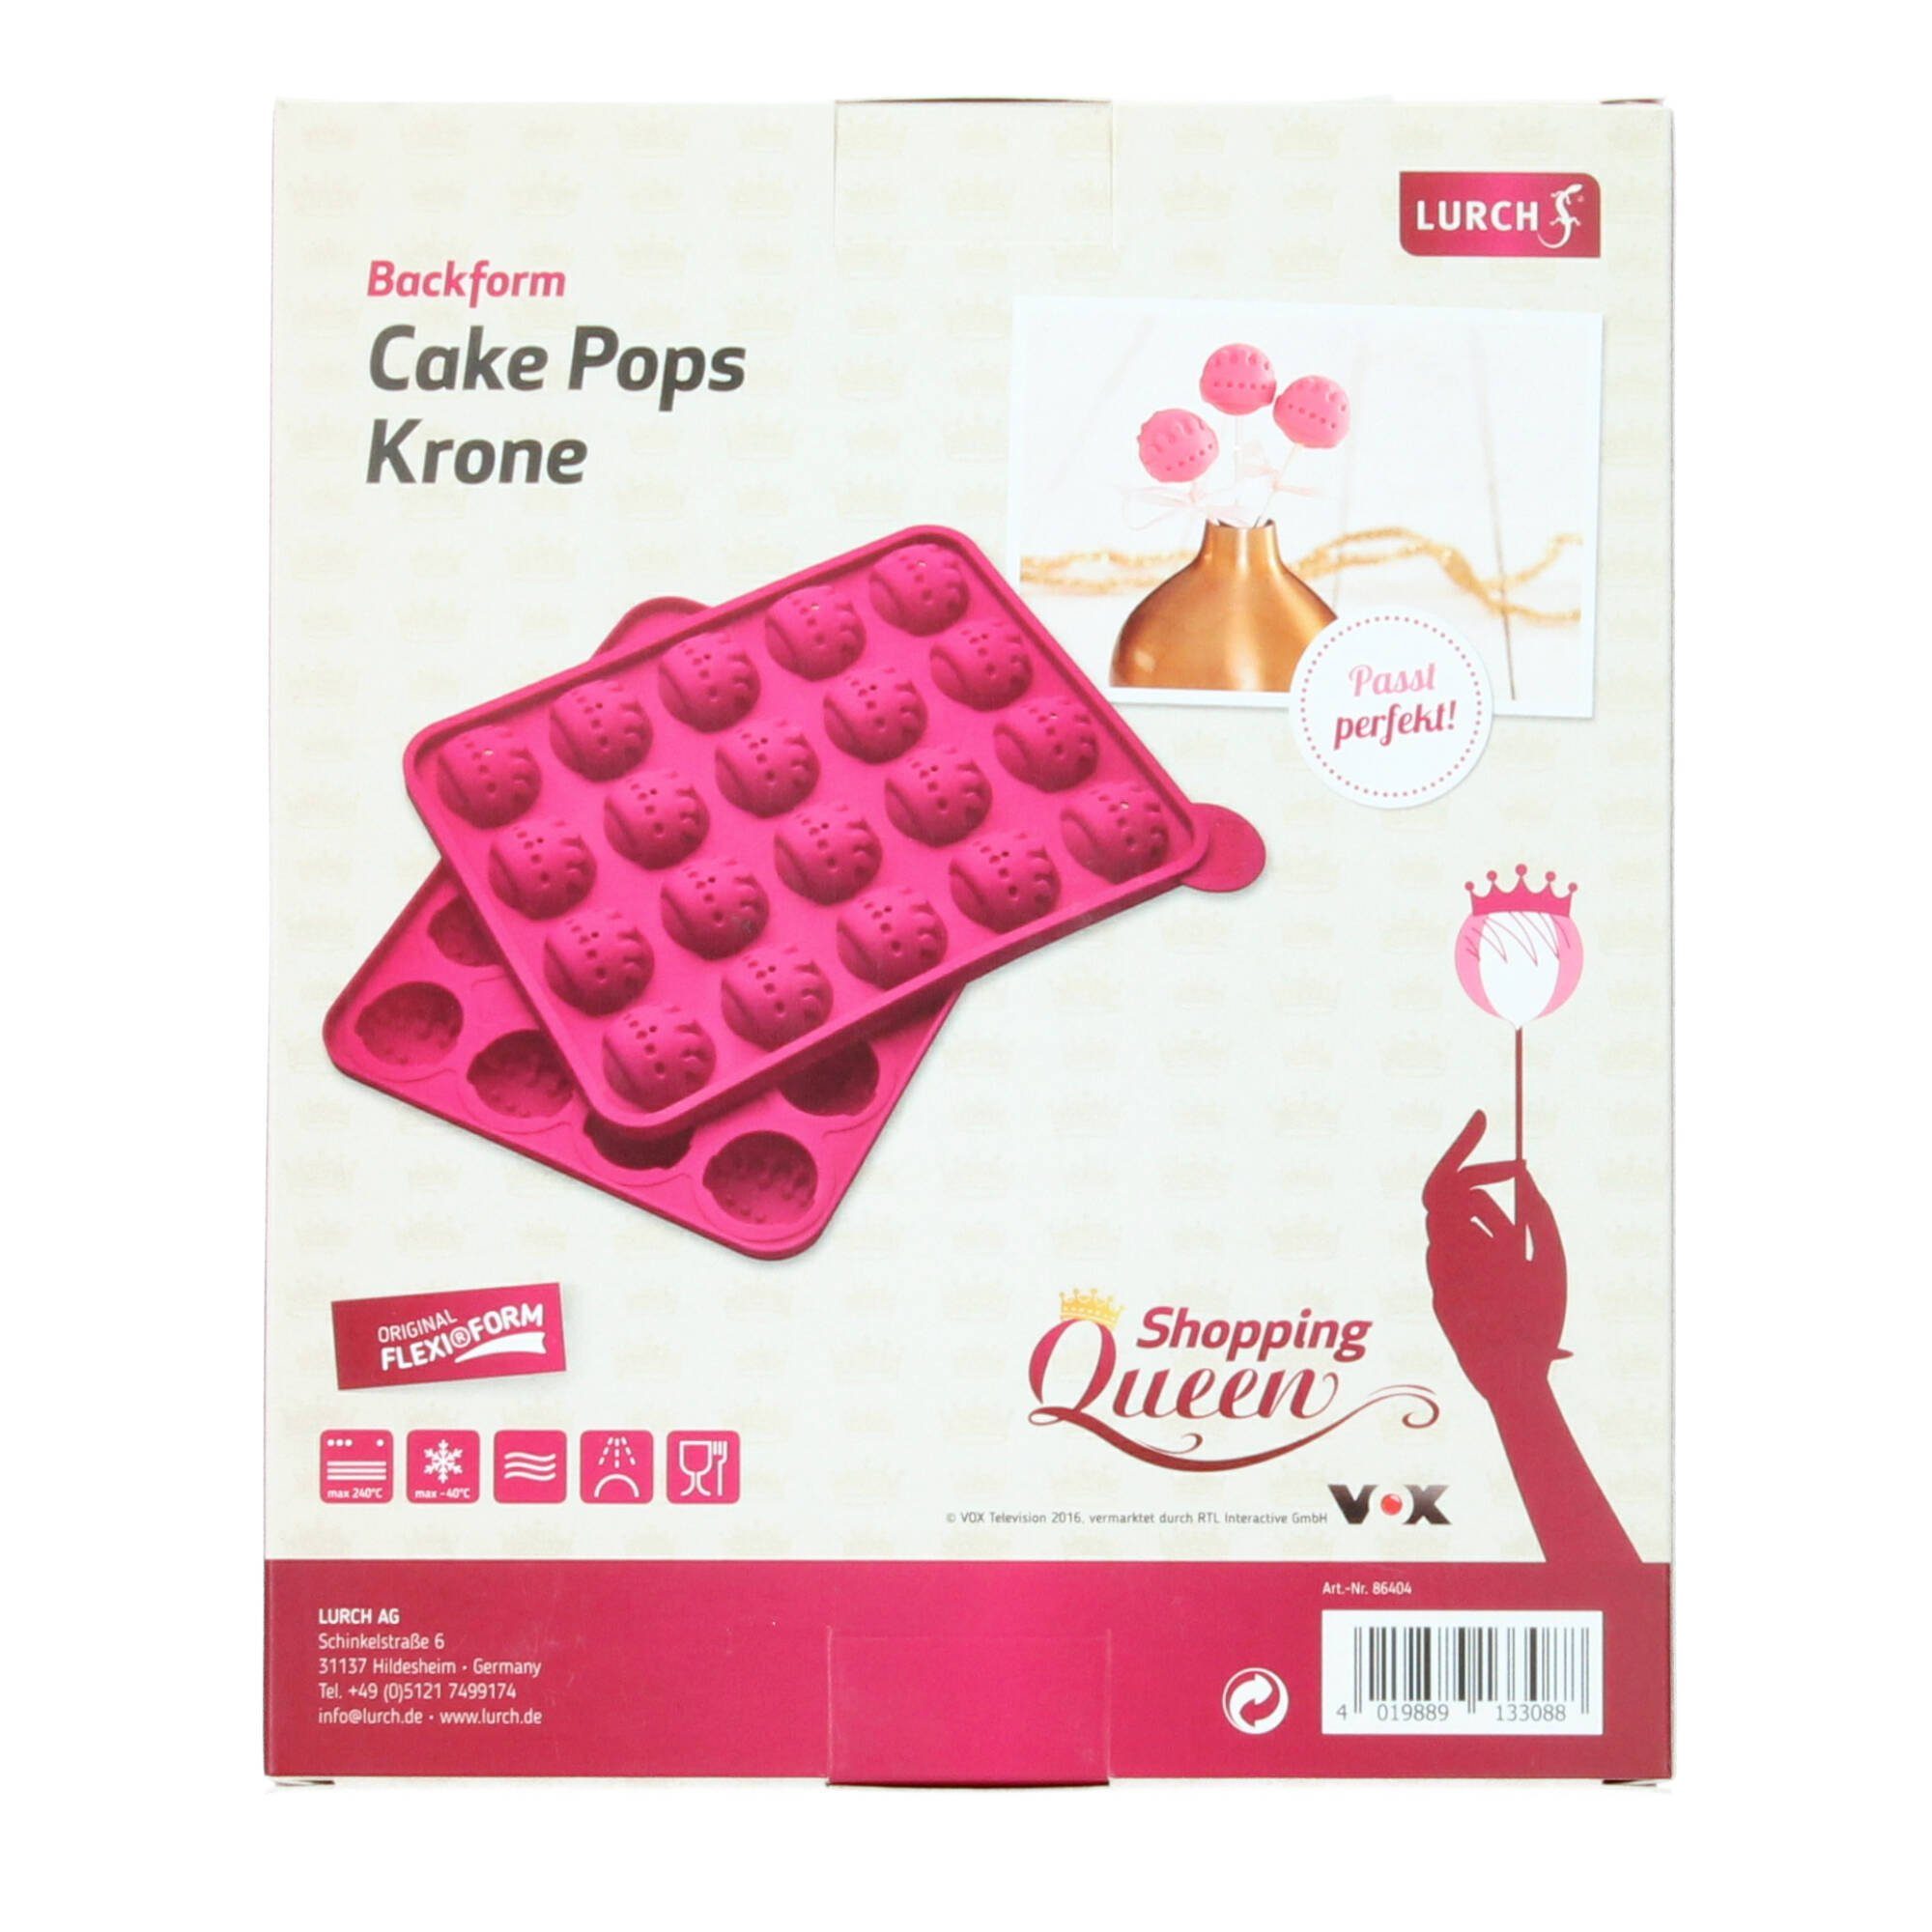 pink Backform Lurch Shopping Krone Queen Cake Pops